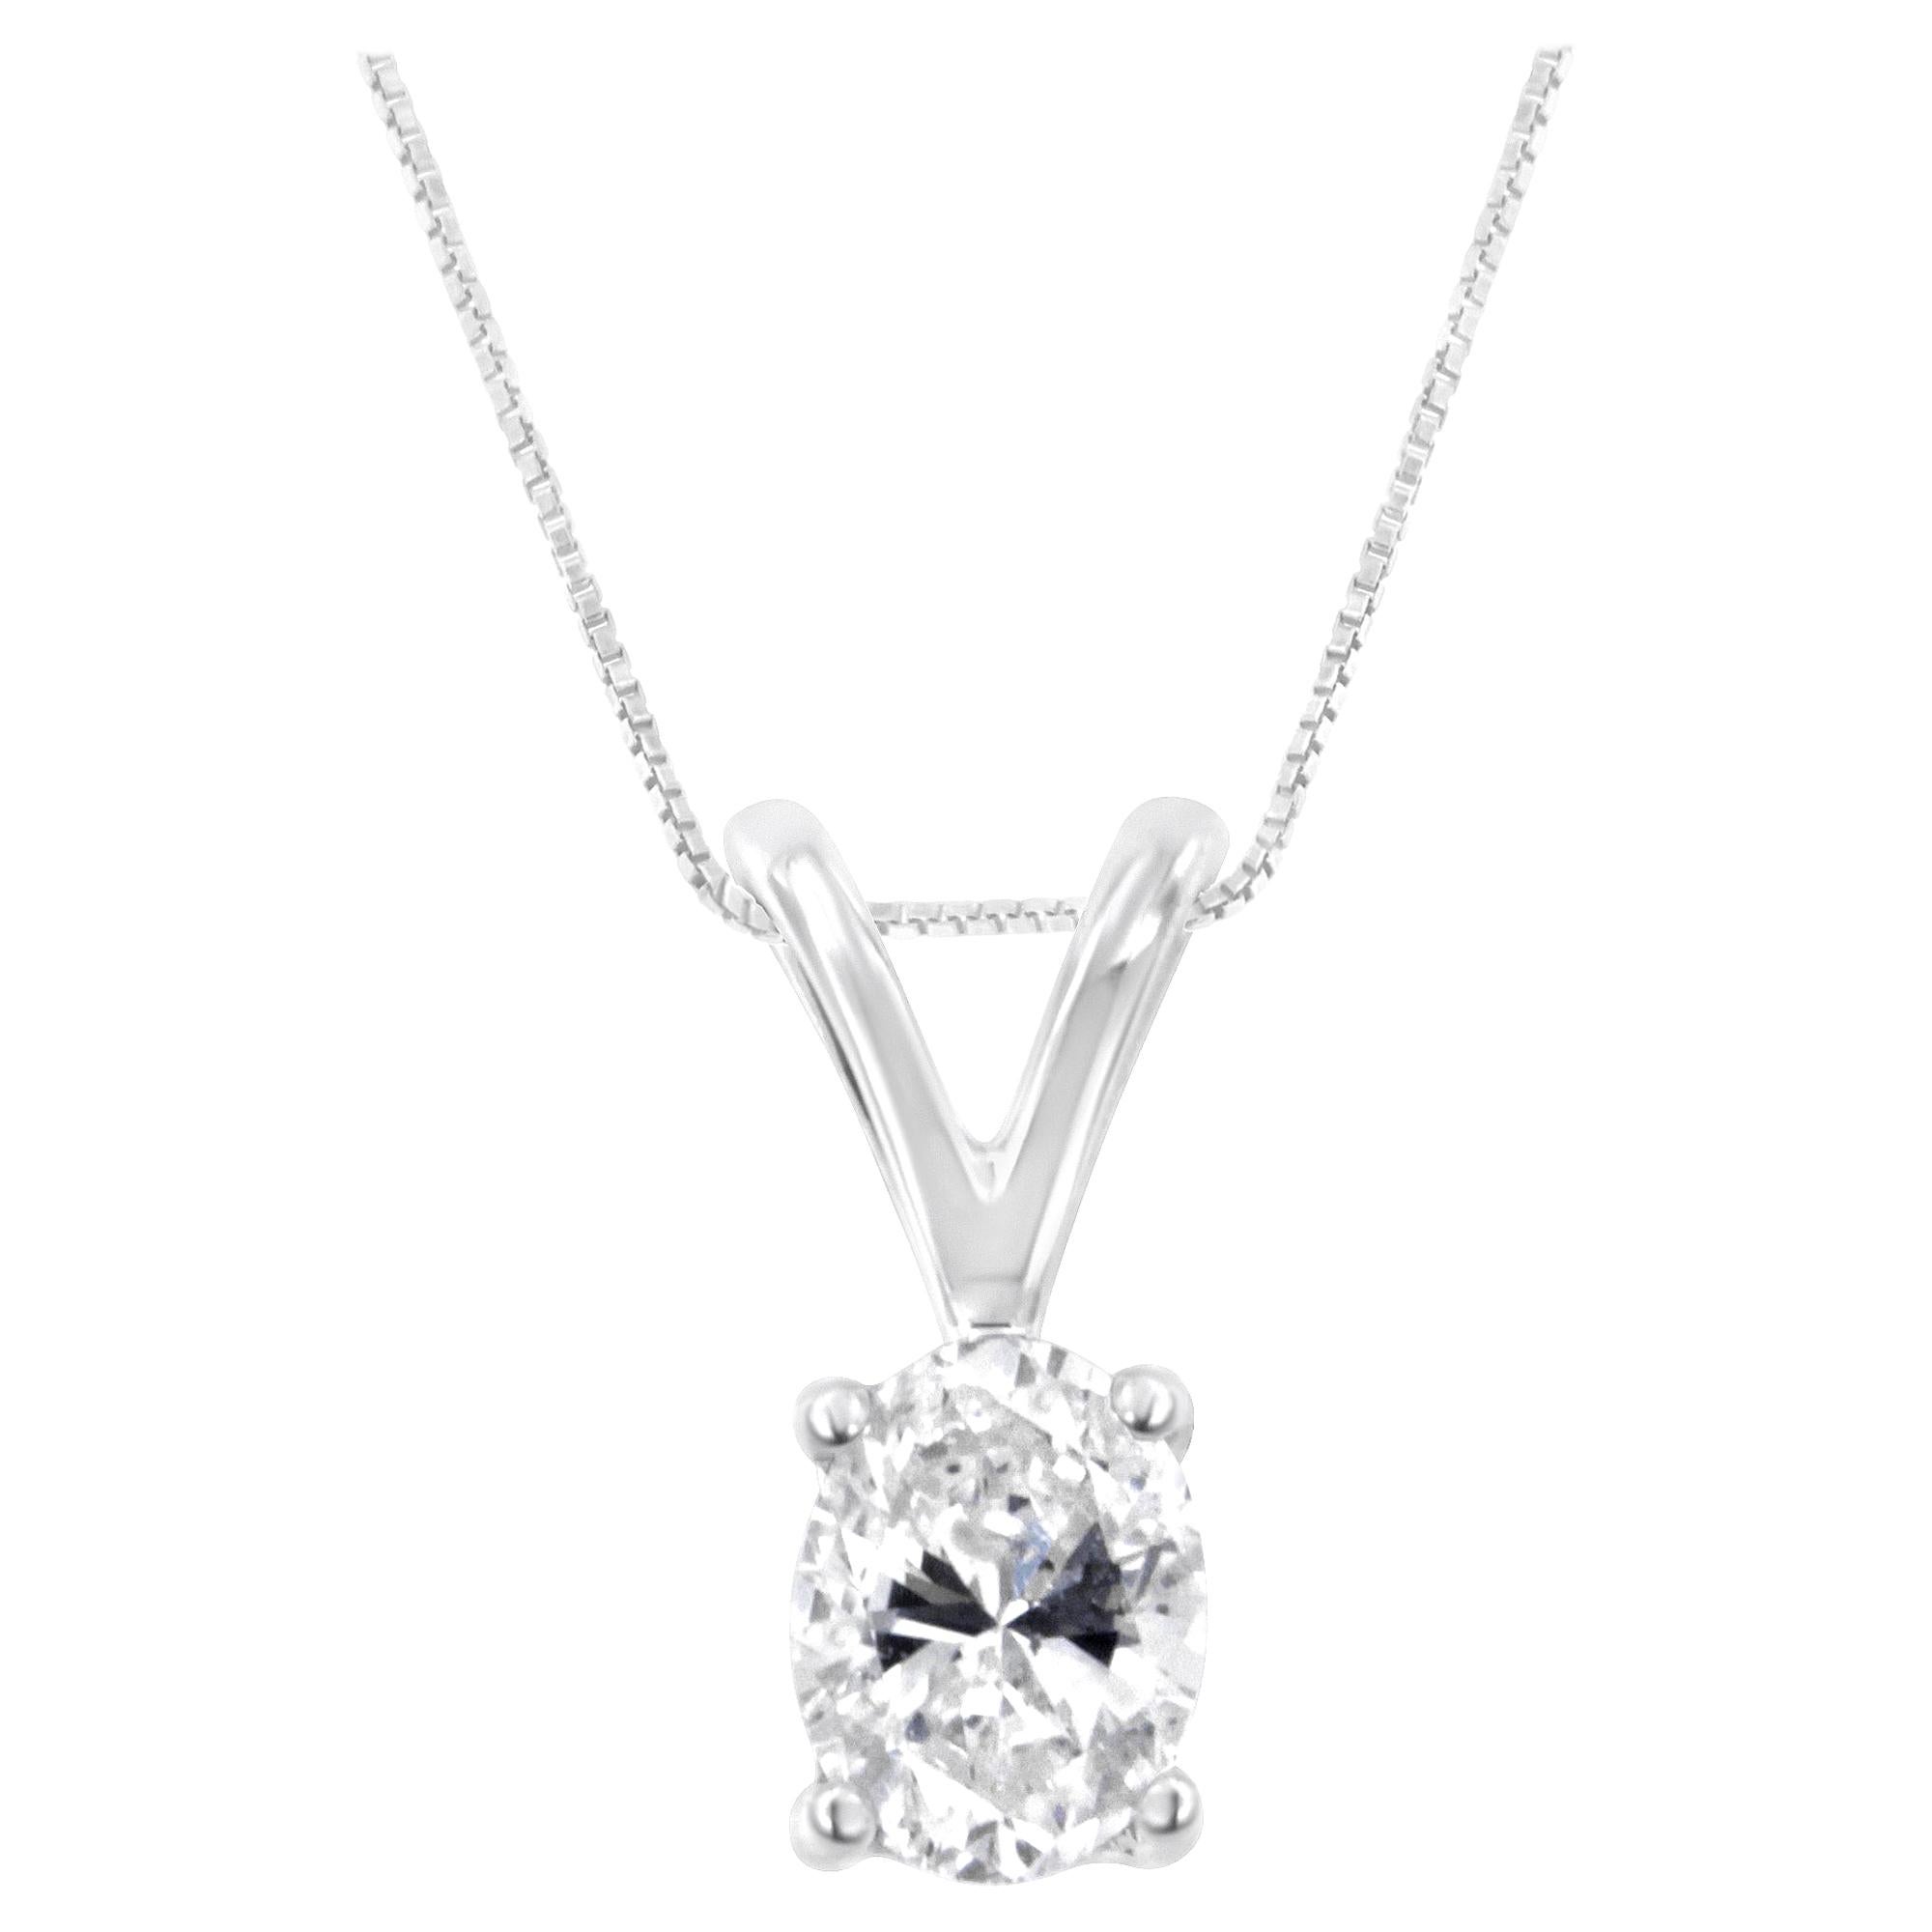 IGI Certified 10K White Gold 1/5 Carat Diamond Oval Pendant Necklace